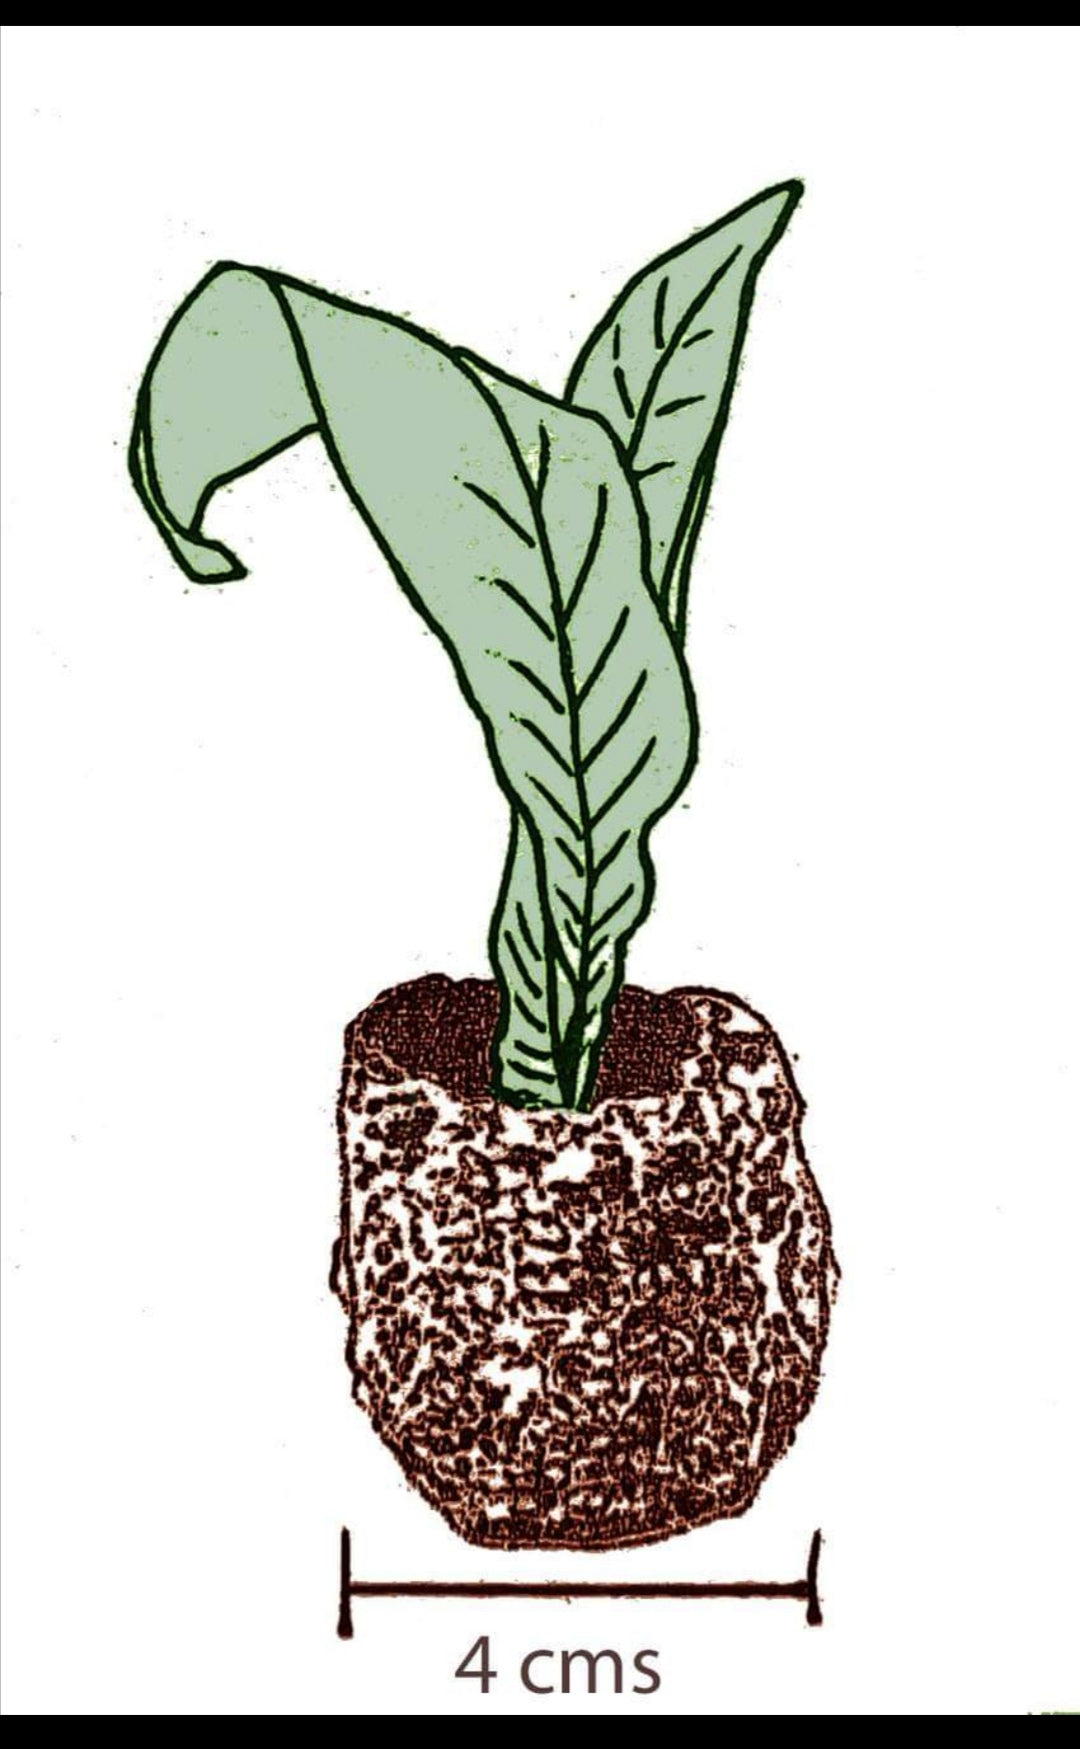 Streptocarpus caeruleus